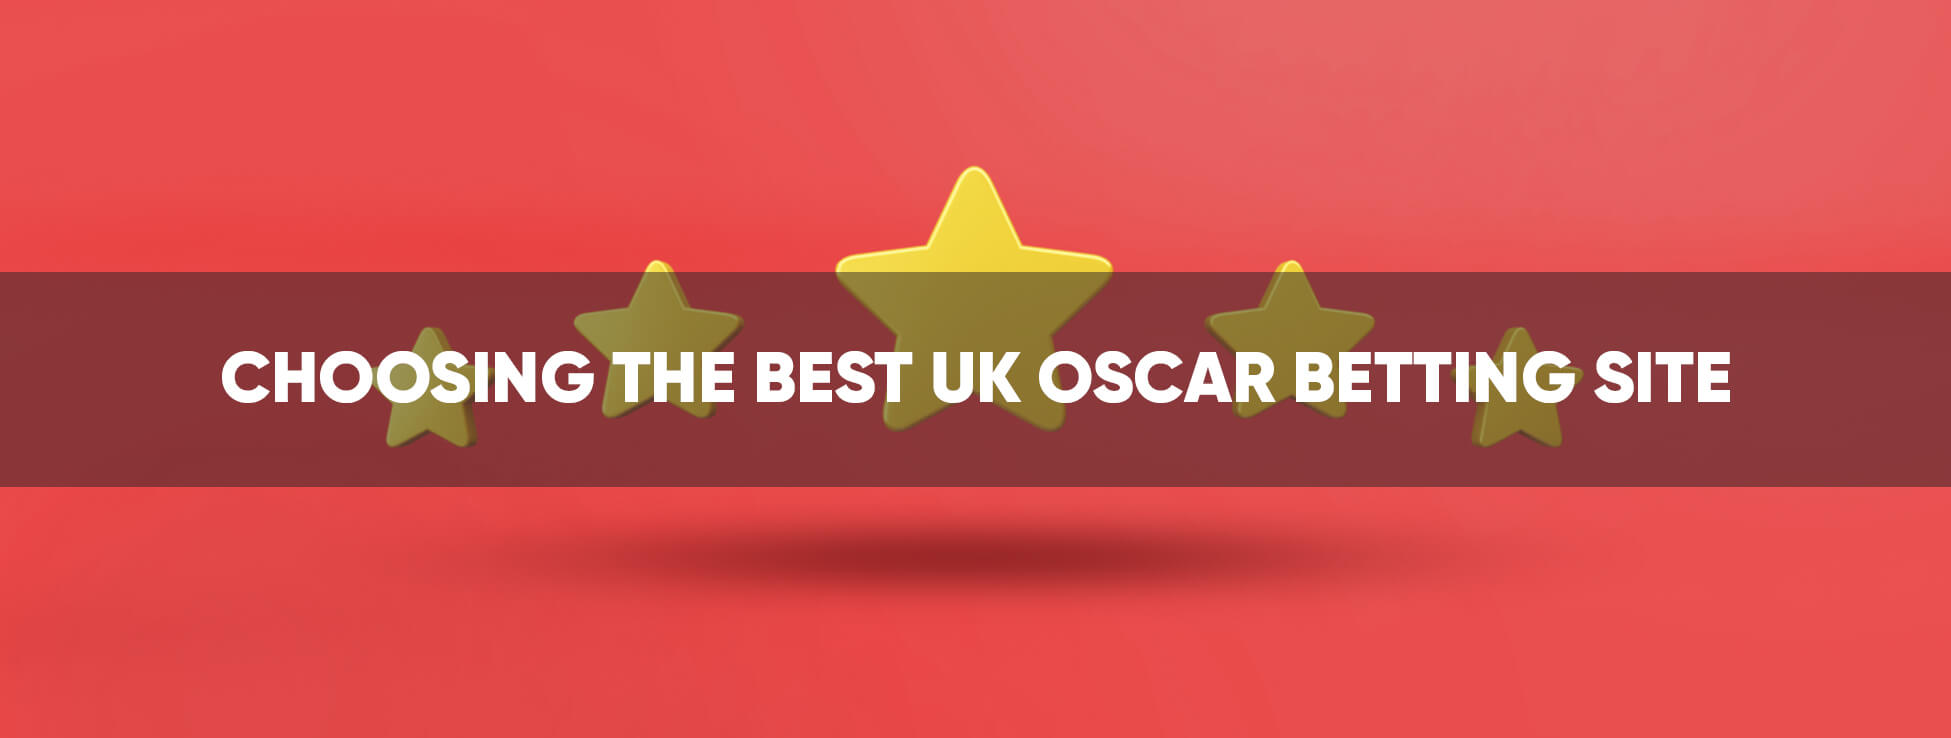 Choosing the best UK Oscar betting site